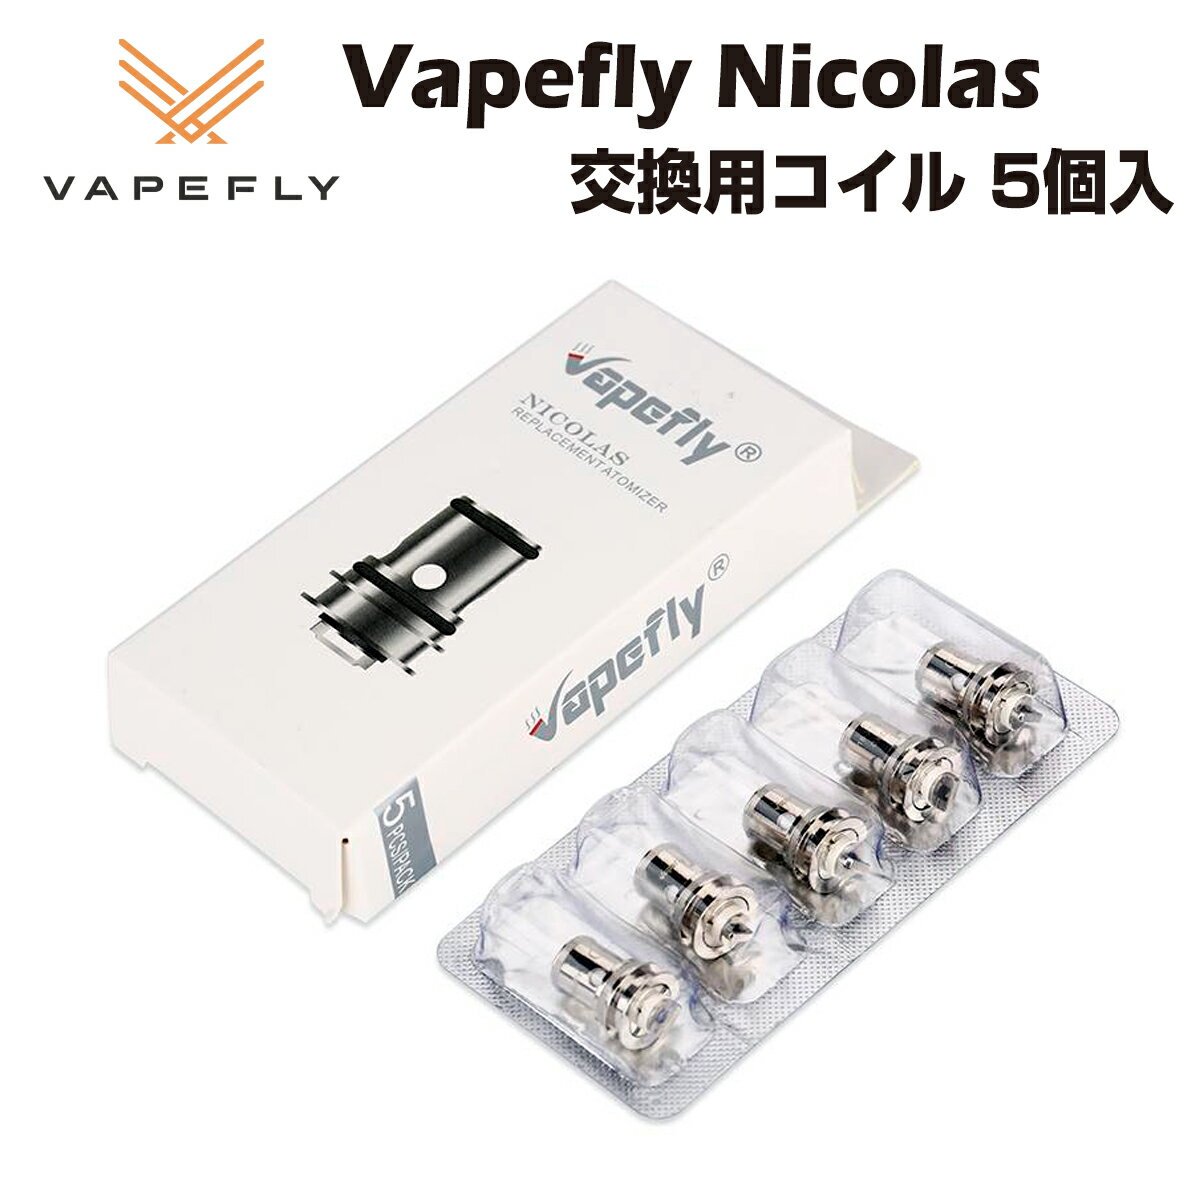 yz Vapefly Nicolas Ή pRC 5 0.6/1.8 xCvtC jRX MNV[ II 2 Tank firecore Galaxy Kit